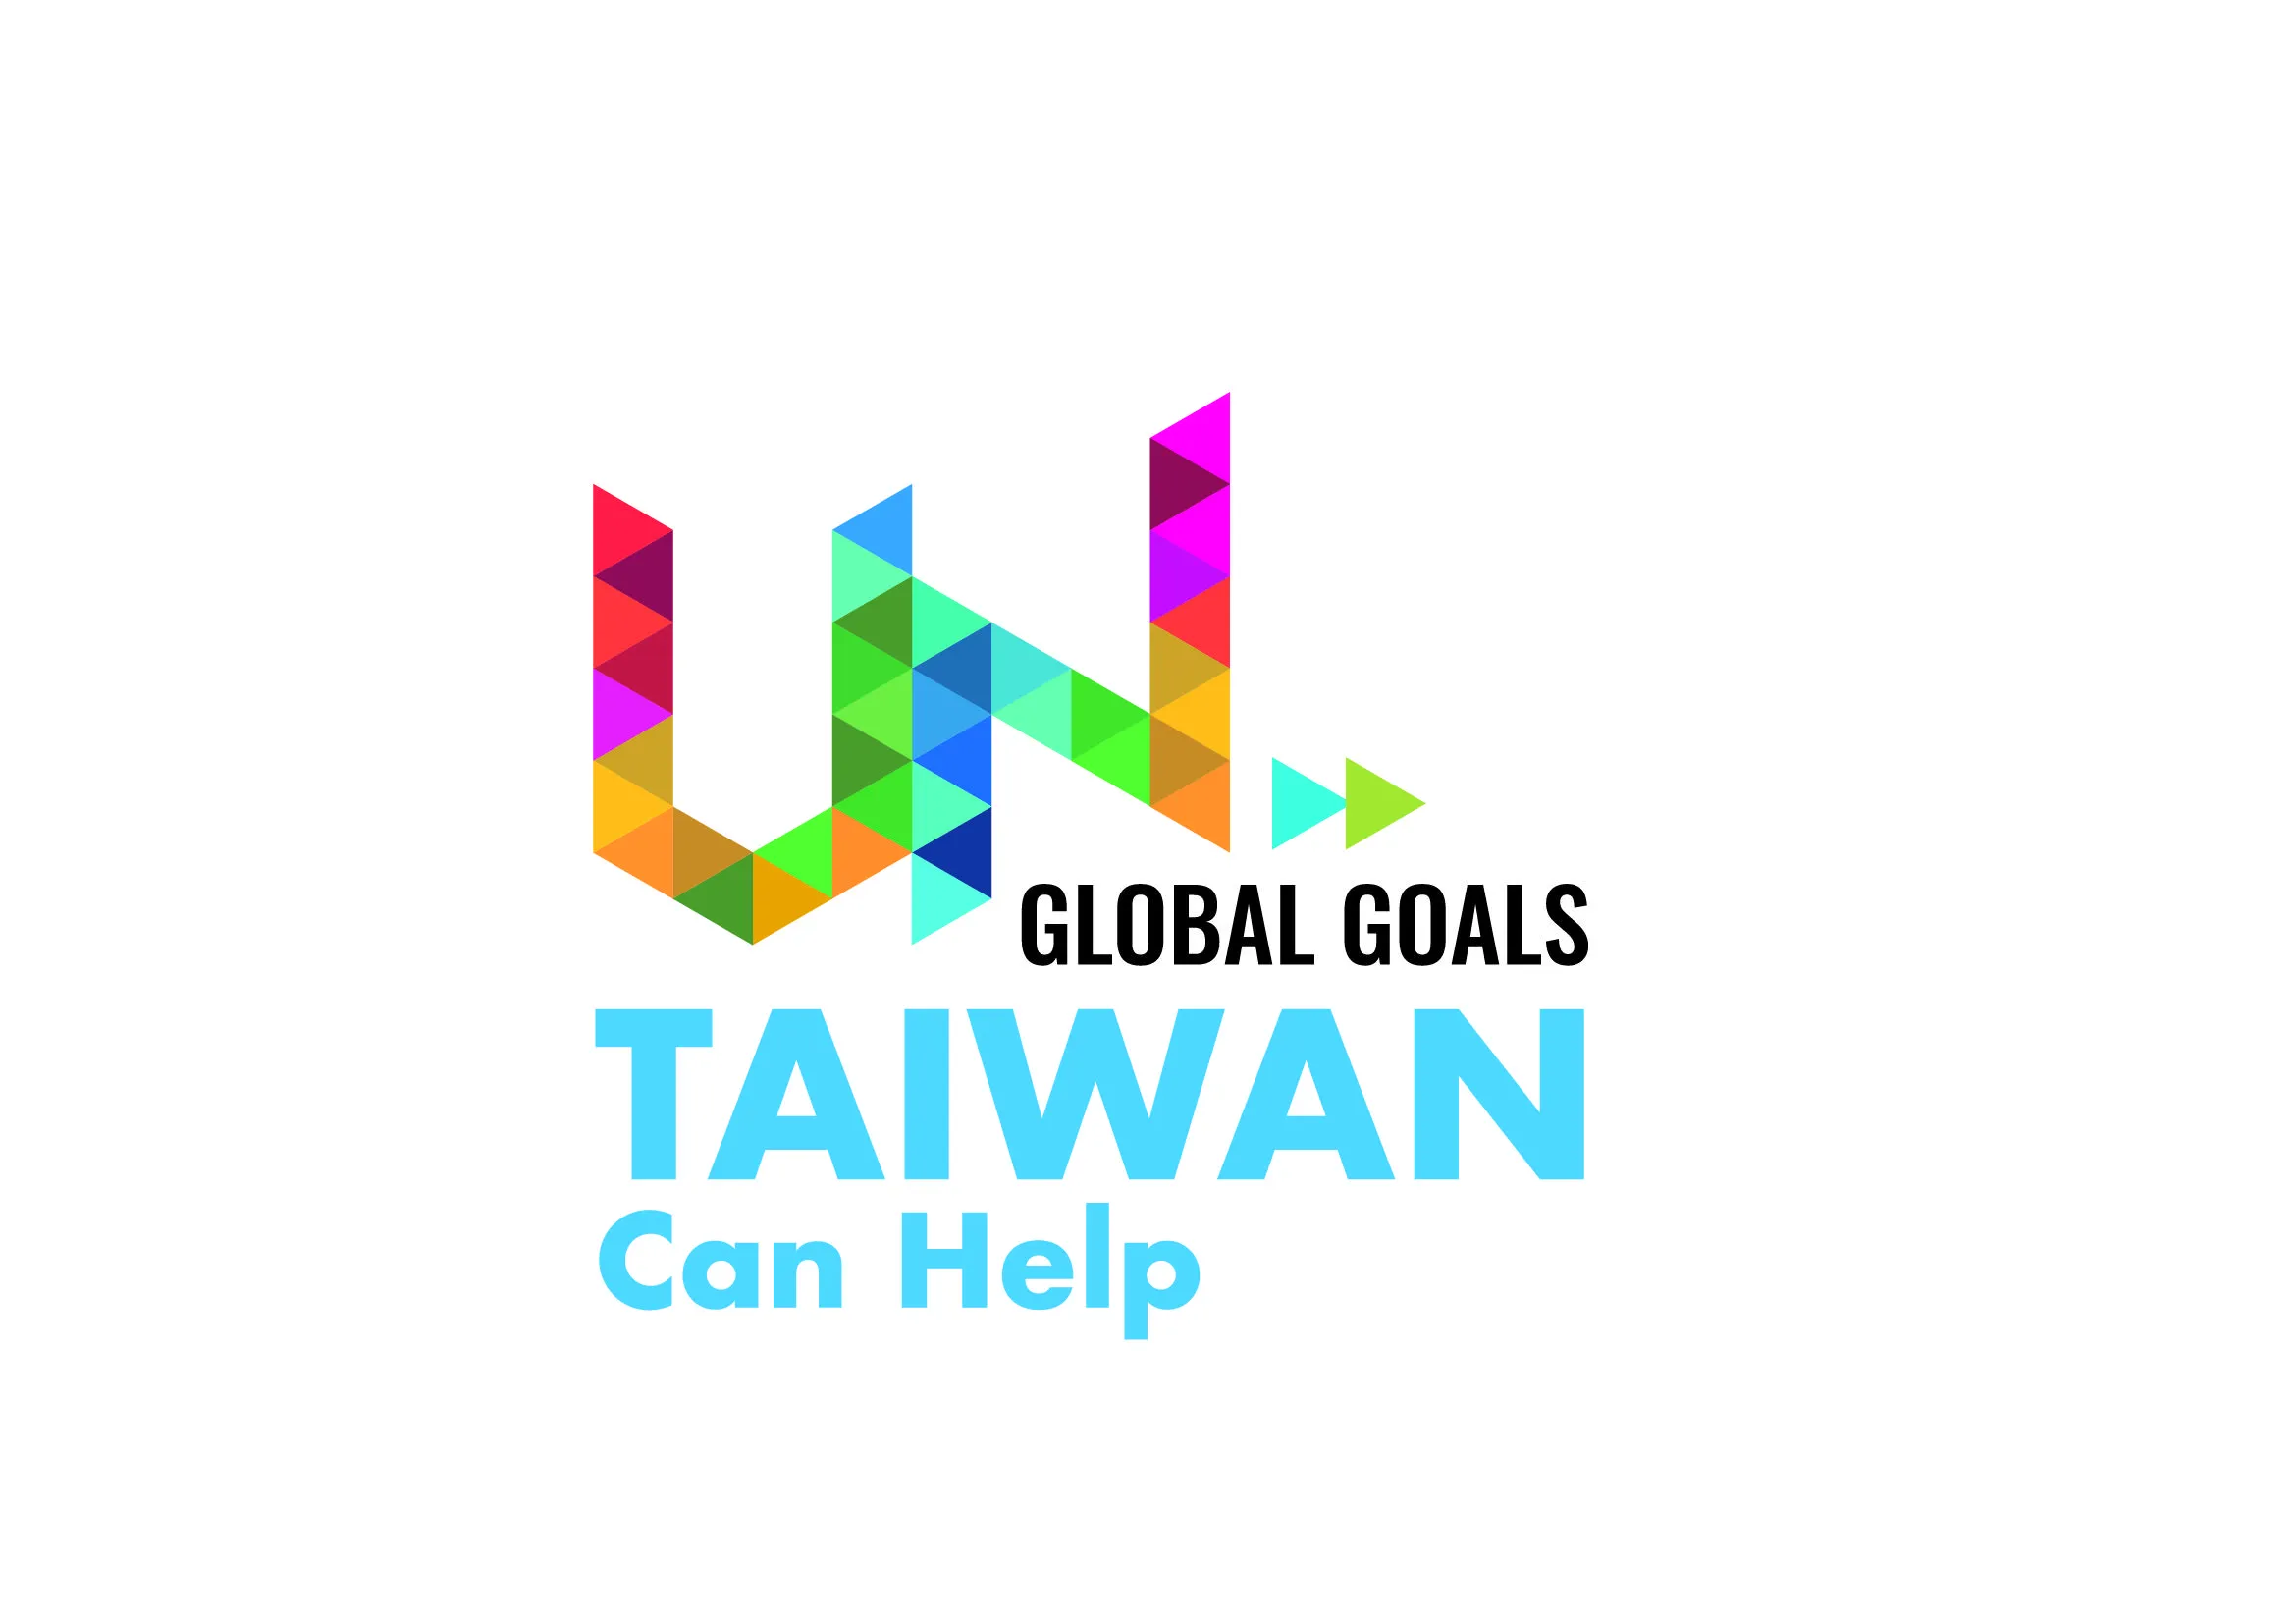 UN Global Goals Taiwan Can Help